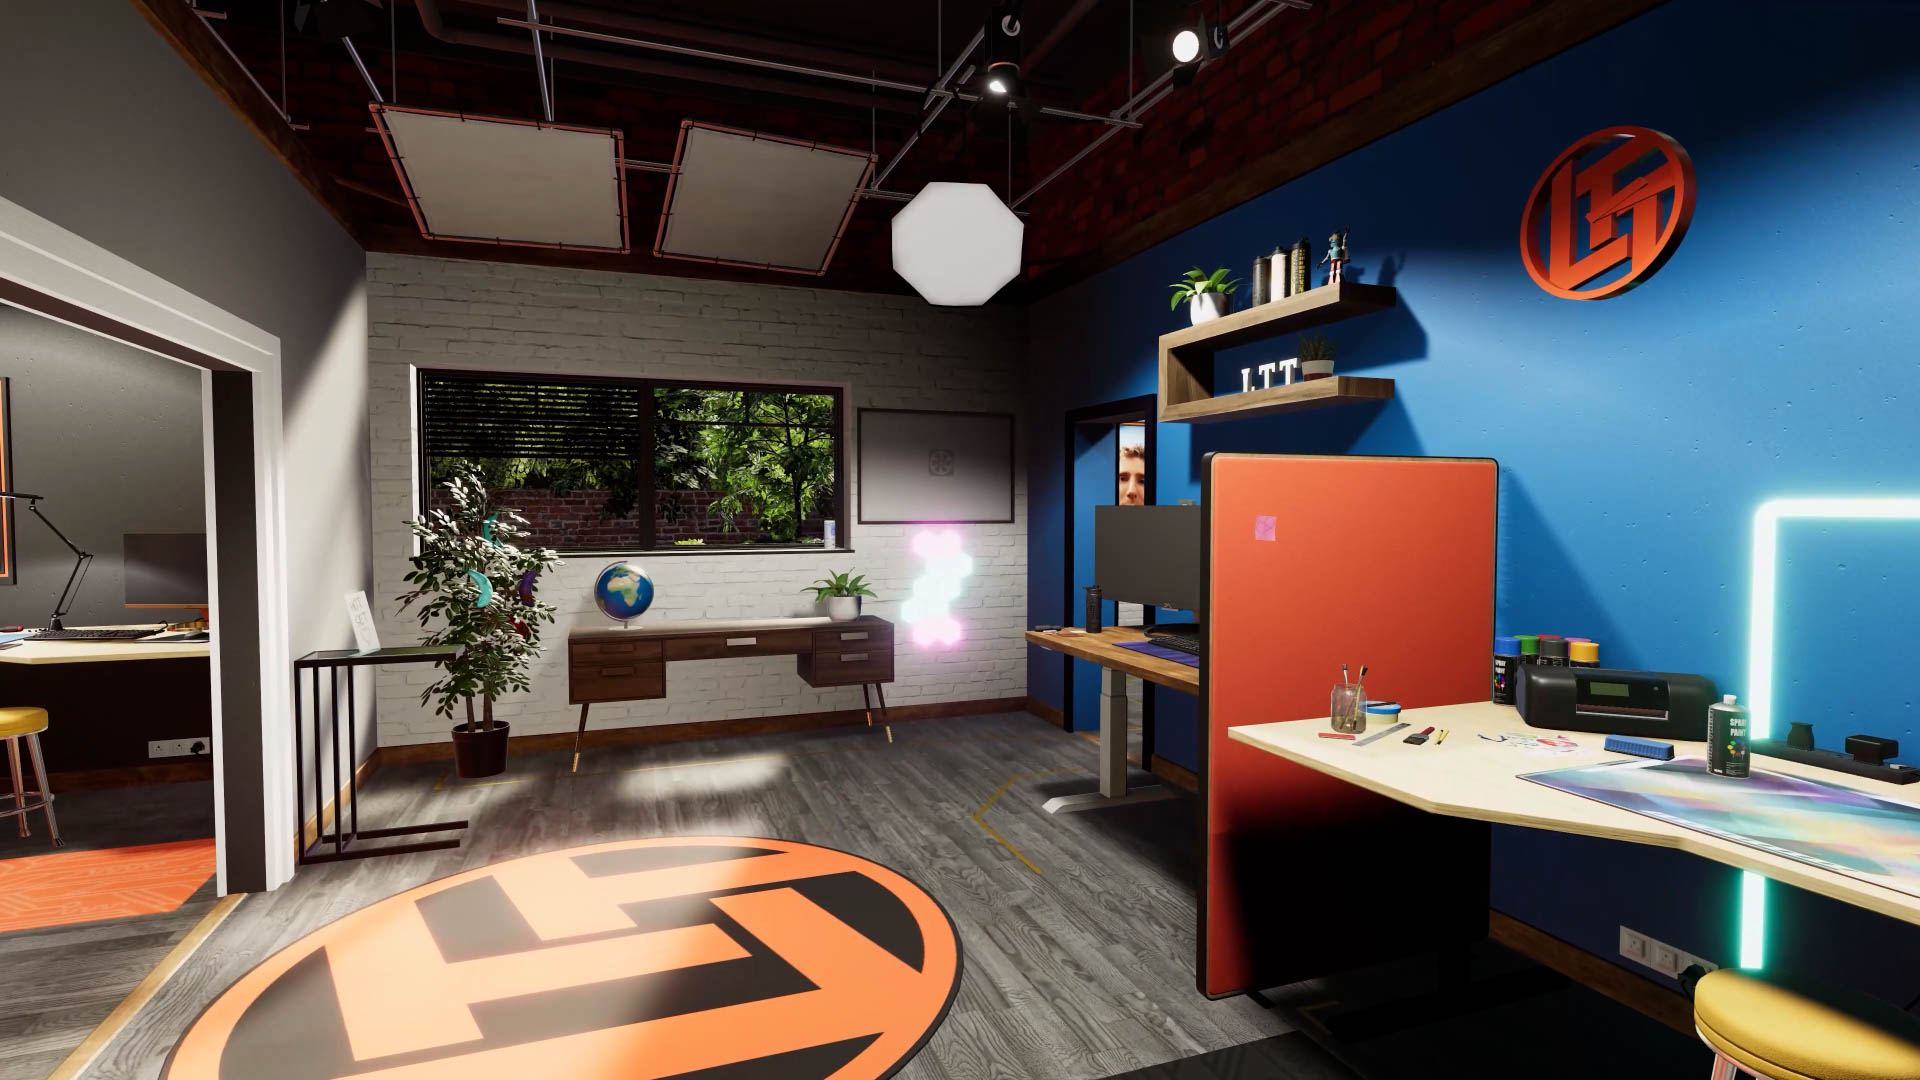 PC Building Simulator 2 — Linus Tech Tips Workshop Theme Trailer